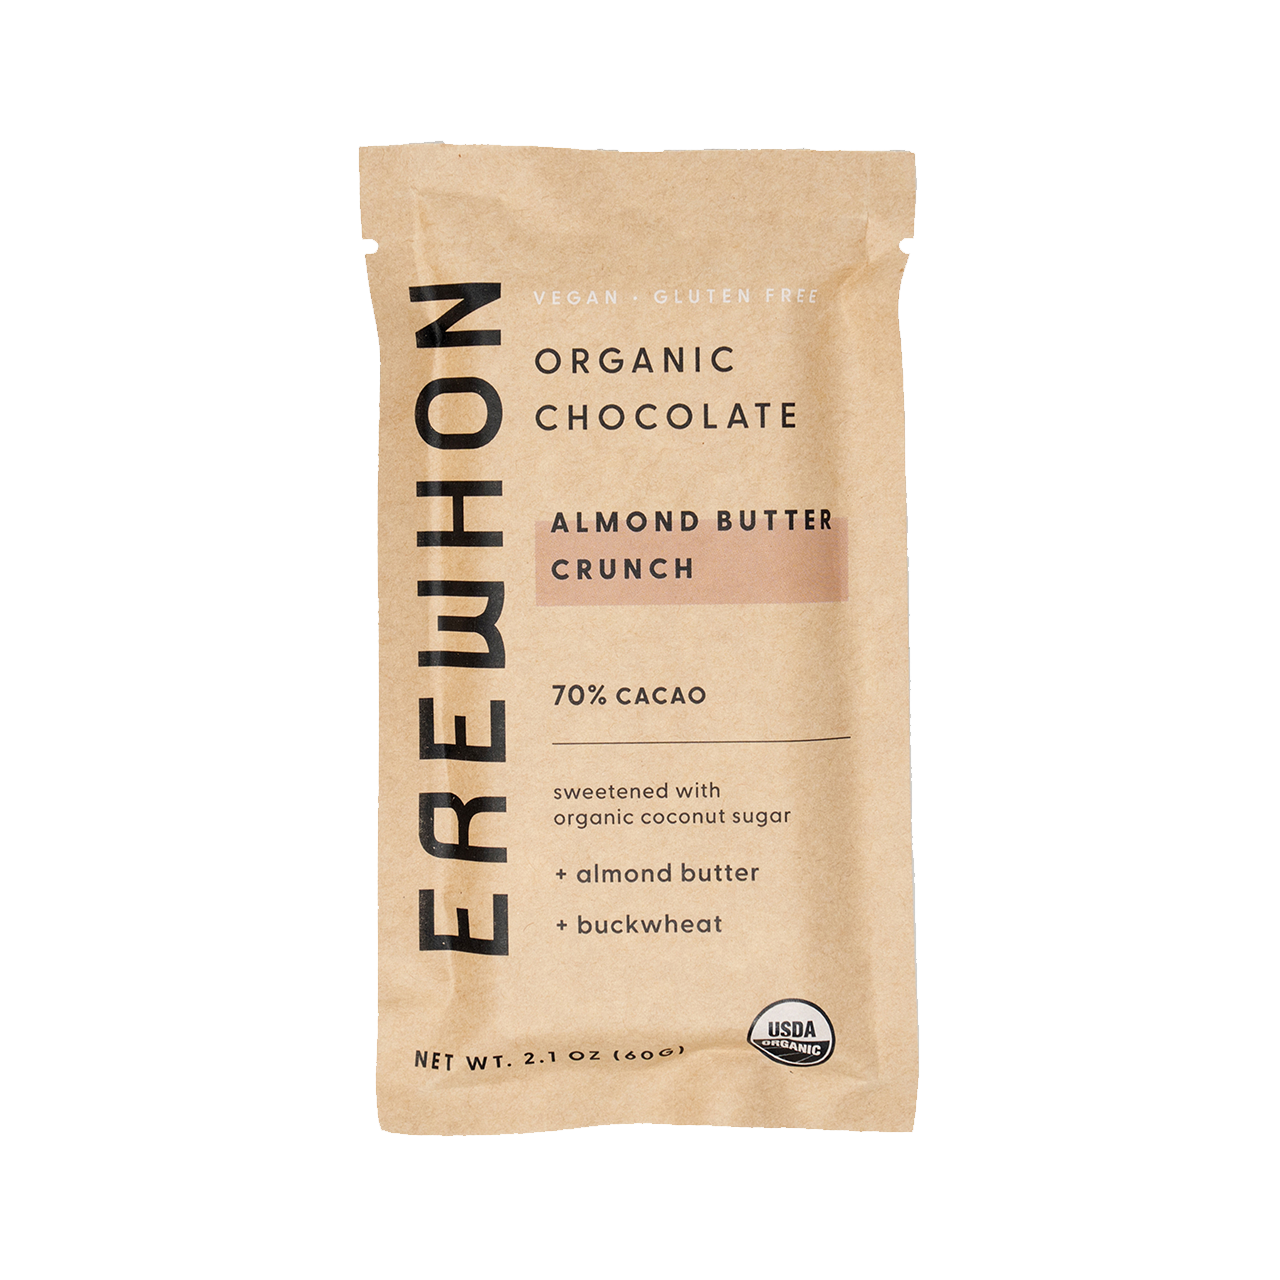 Organic Chocolate Bar | Almond Butter Crunch-Candy & Chocolate-Erewhon